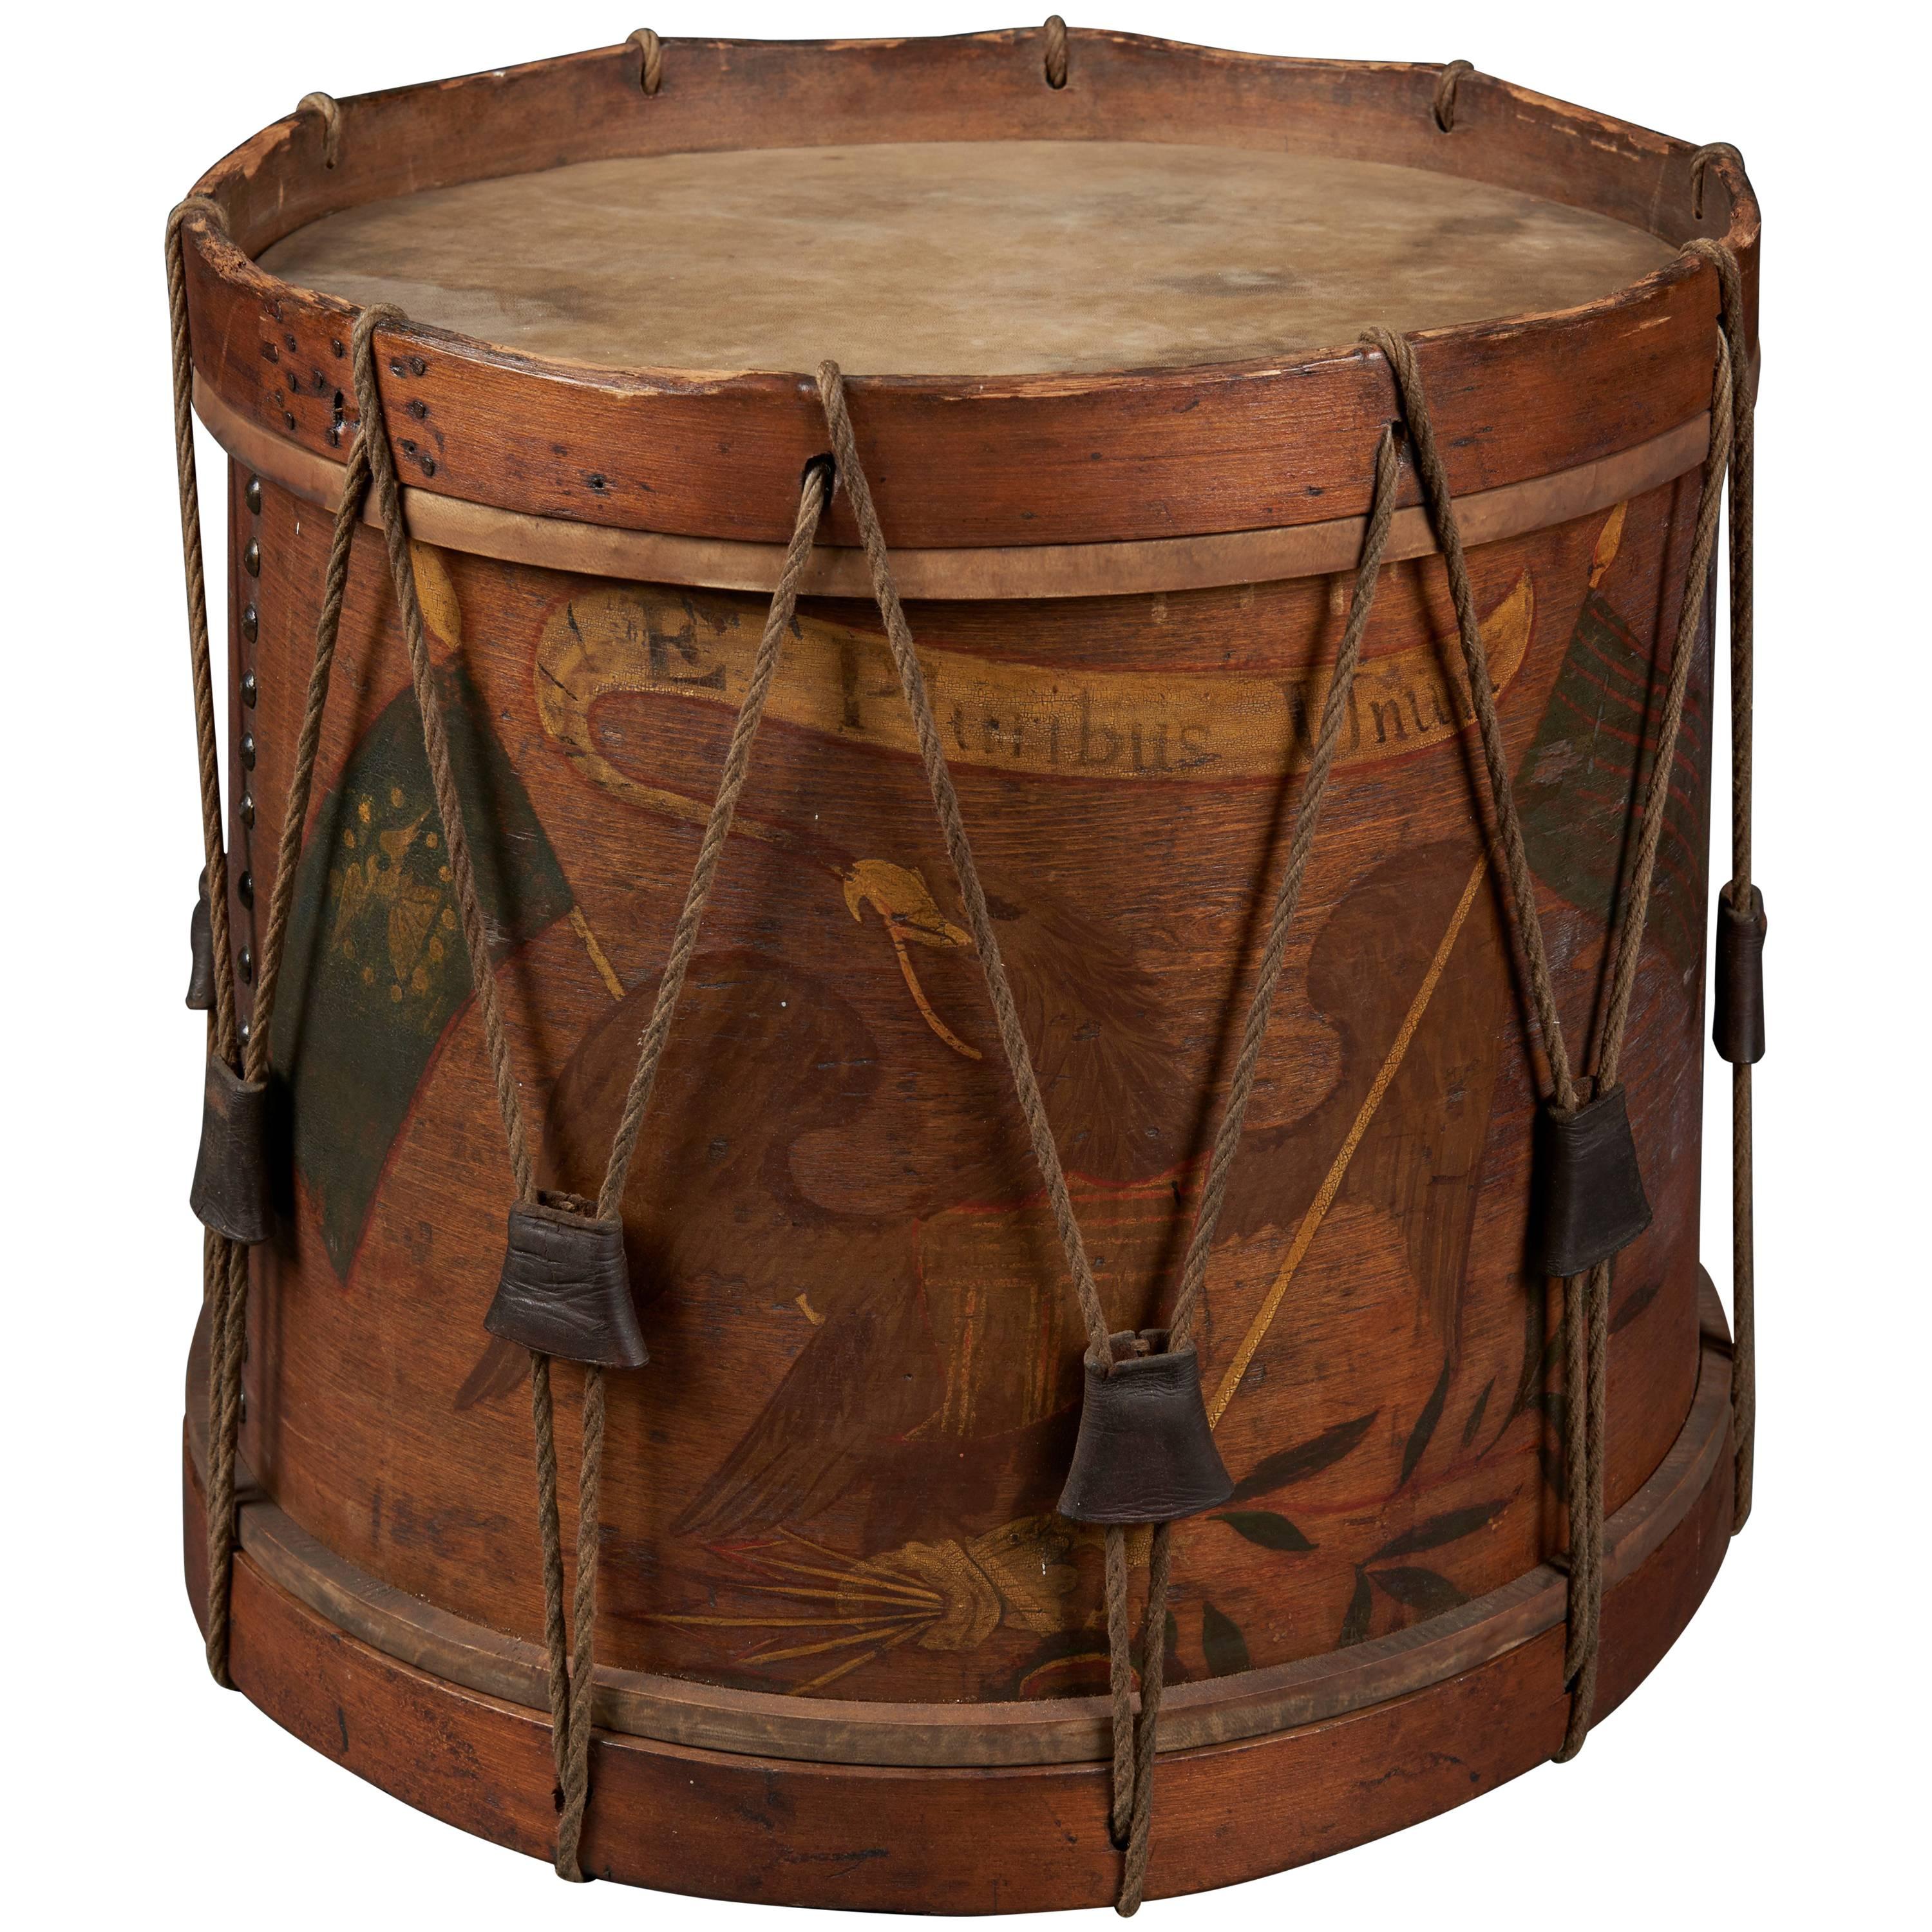 Pre-Civil War New York State Militia Drum For Sale